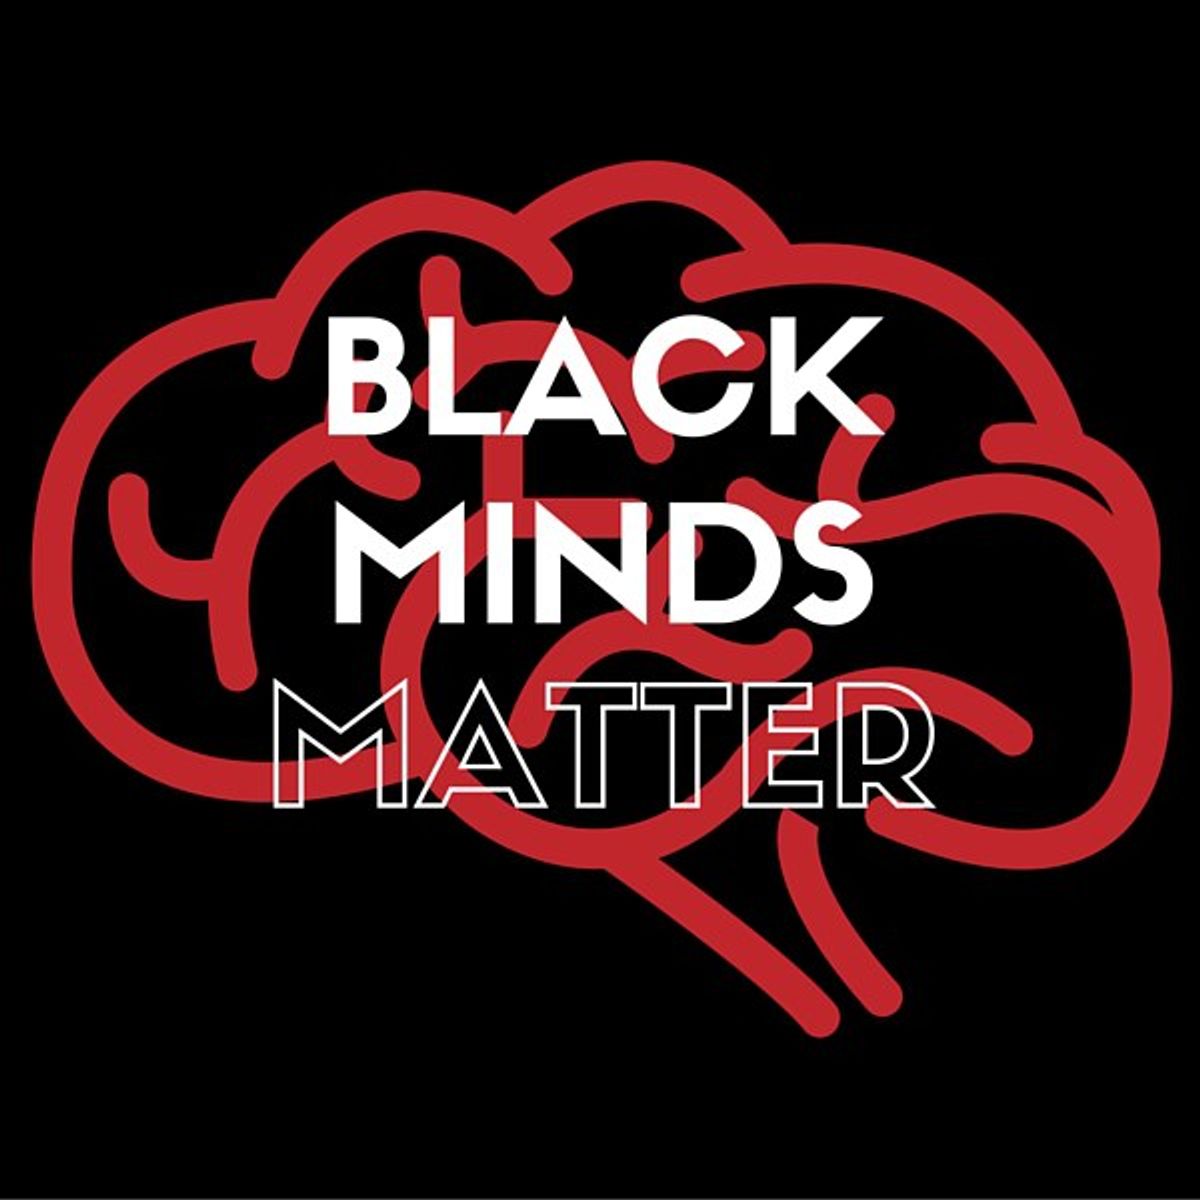 Black Lives and especially Black Minds Matter